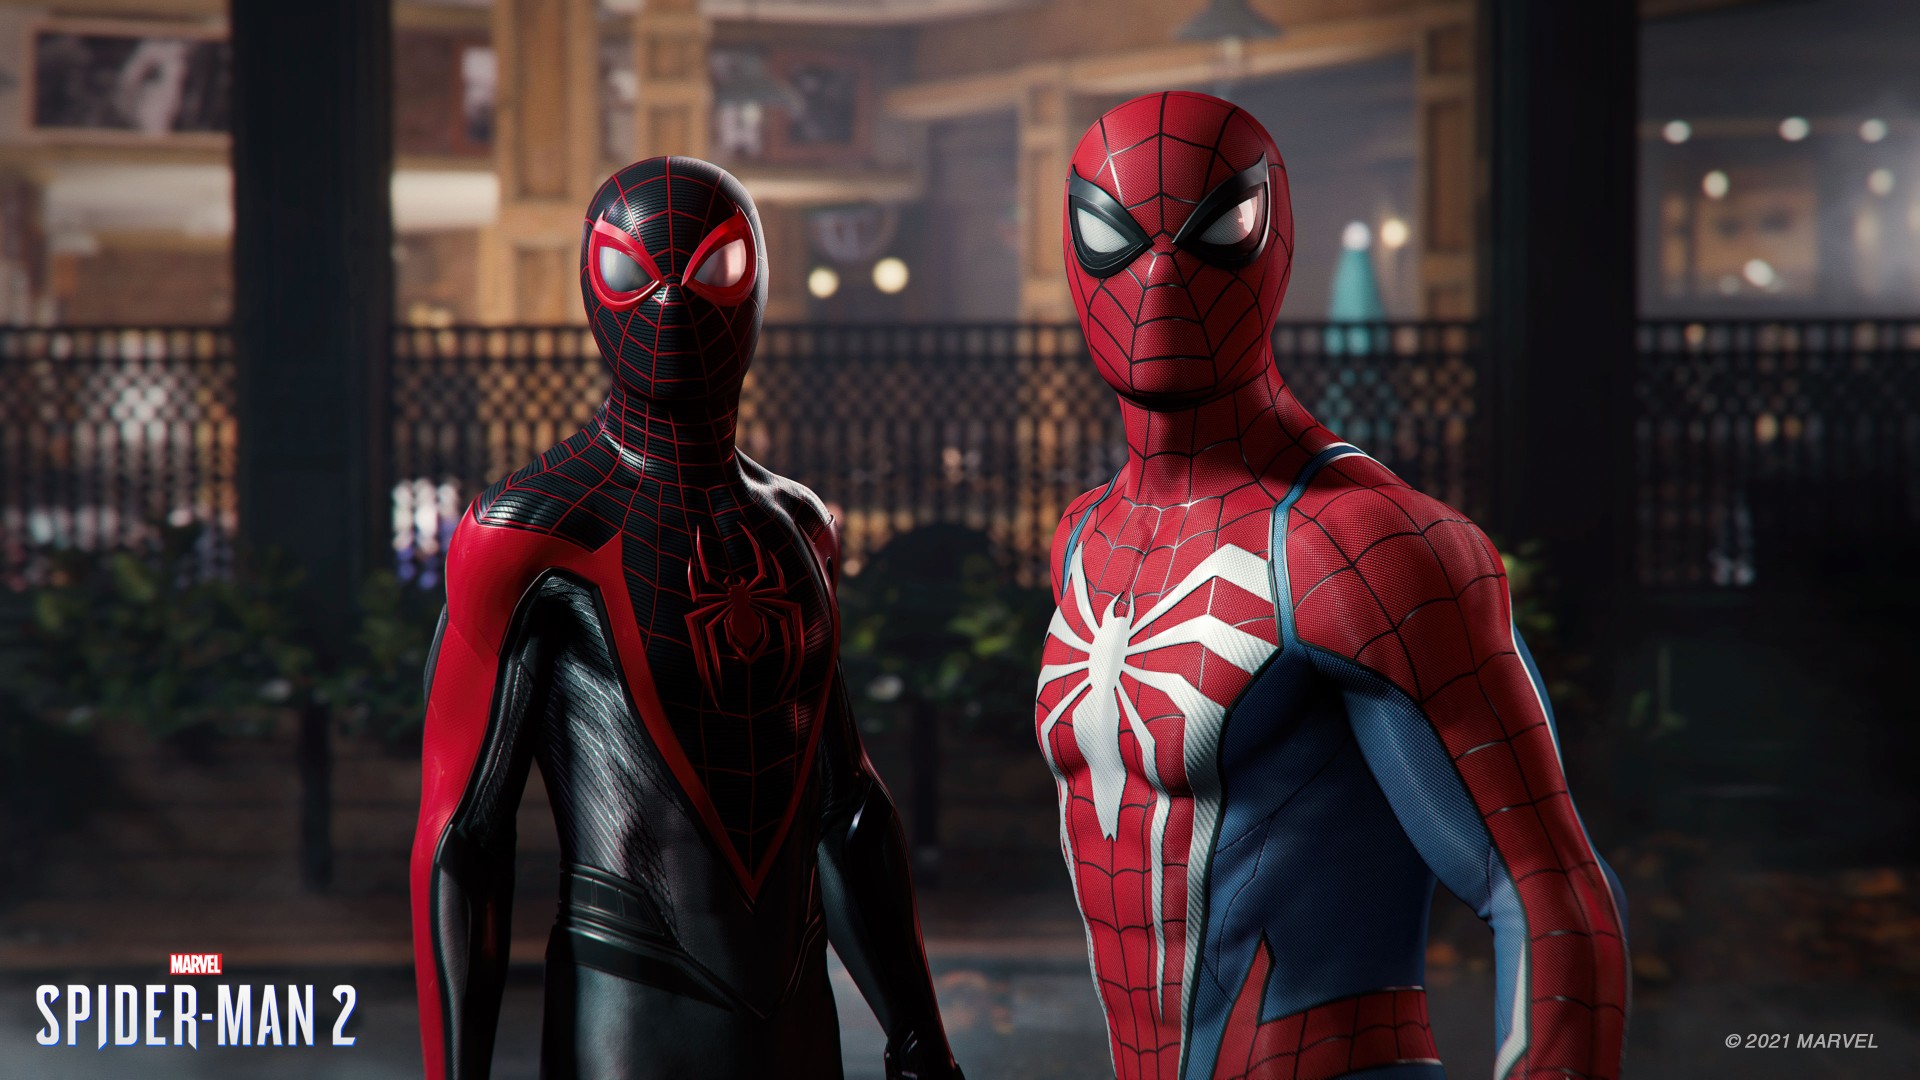 Upcoming Marvel games: Marvel's Spider-Man 2